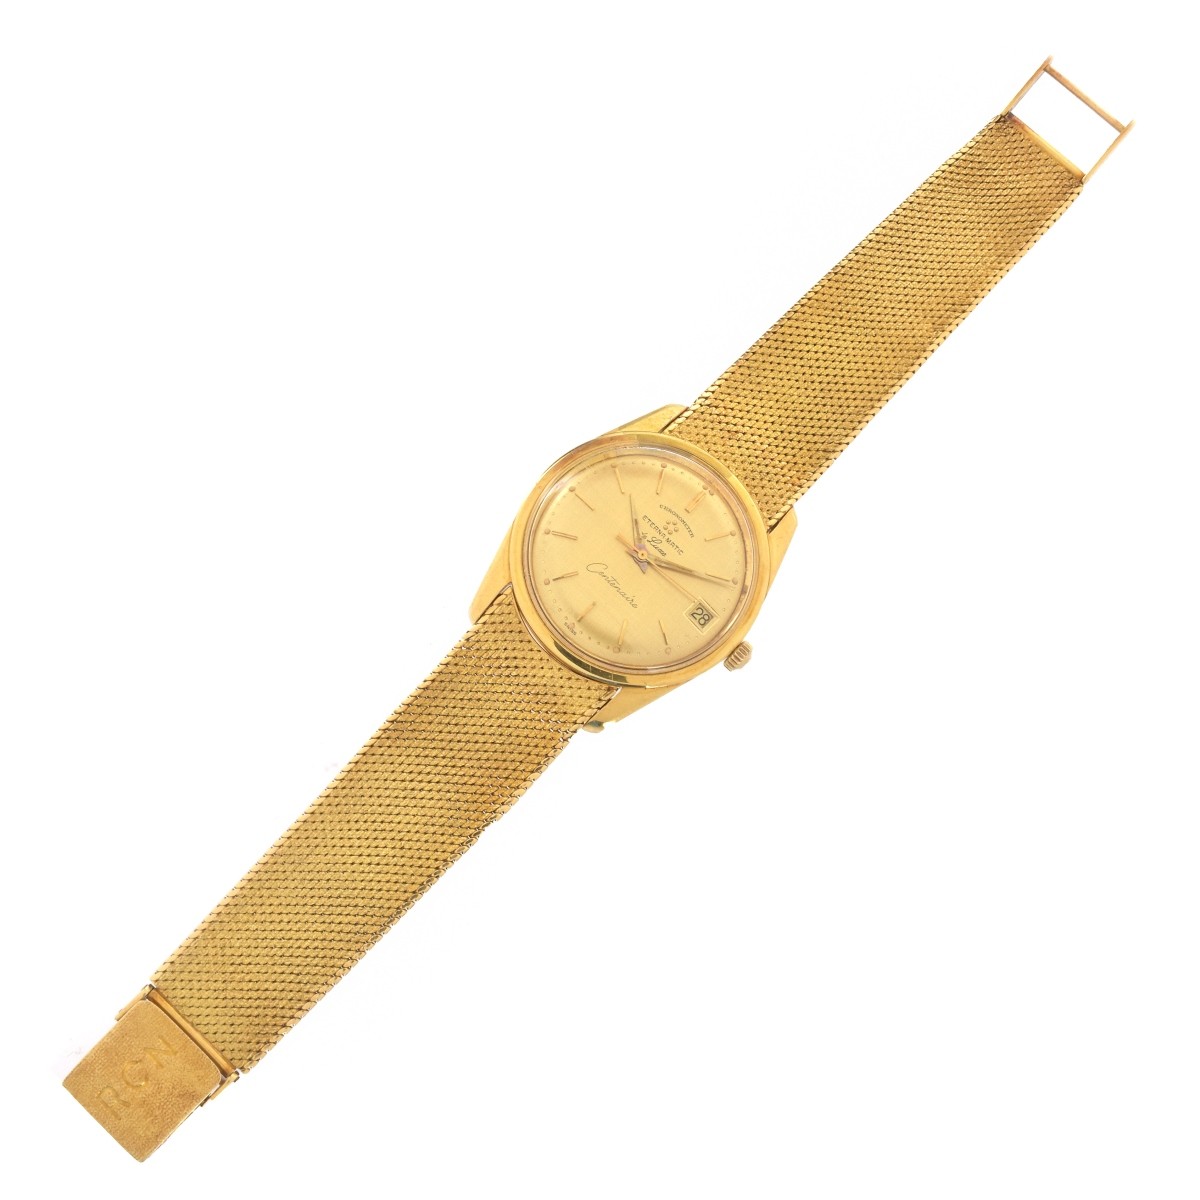 Eterna-Matic 18K Watch